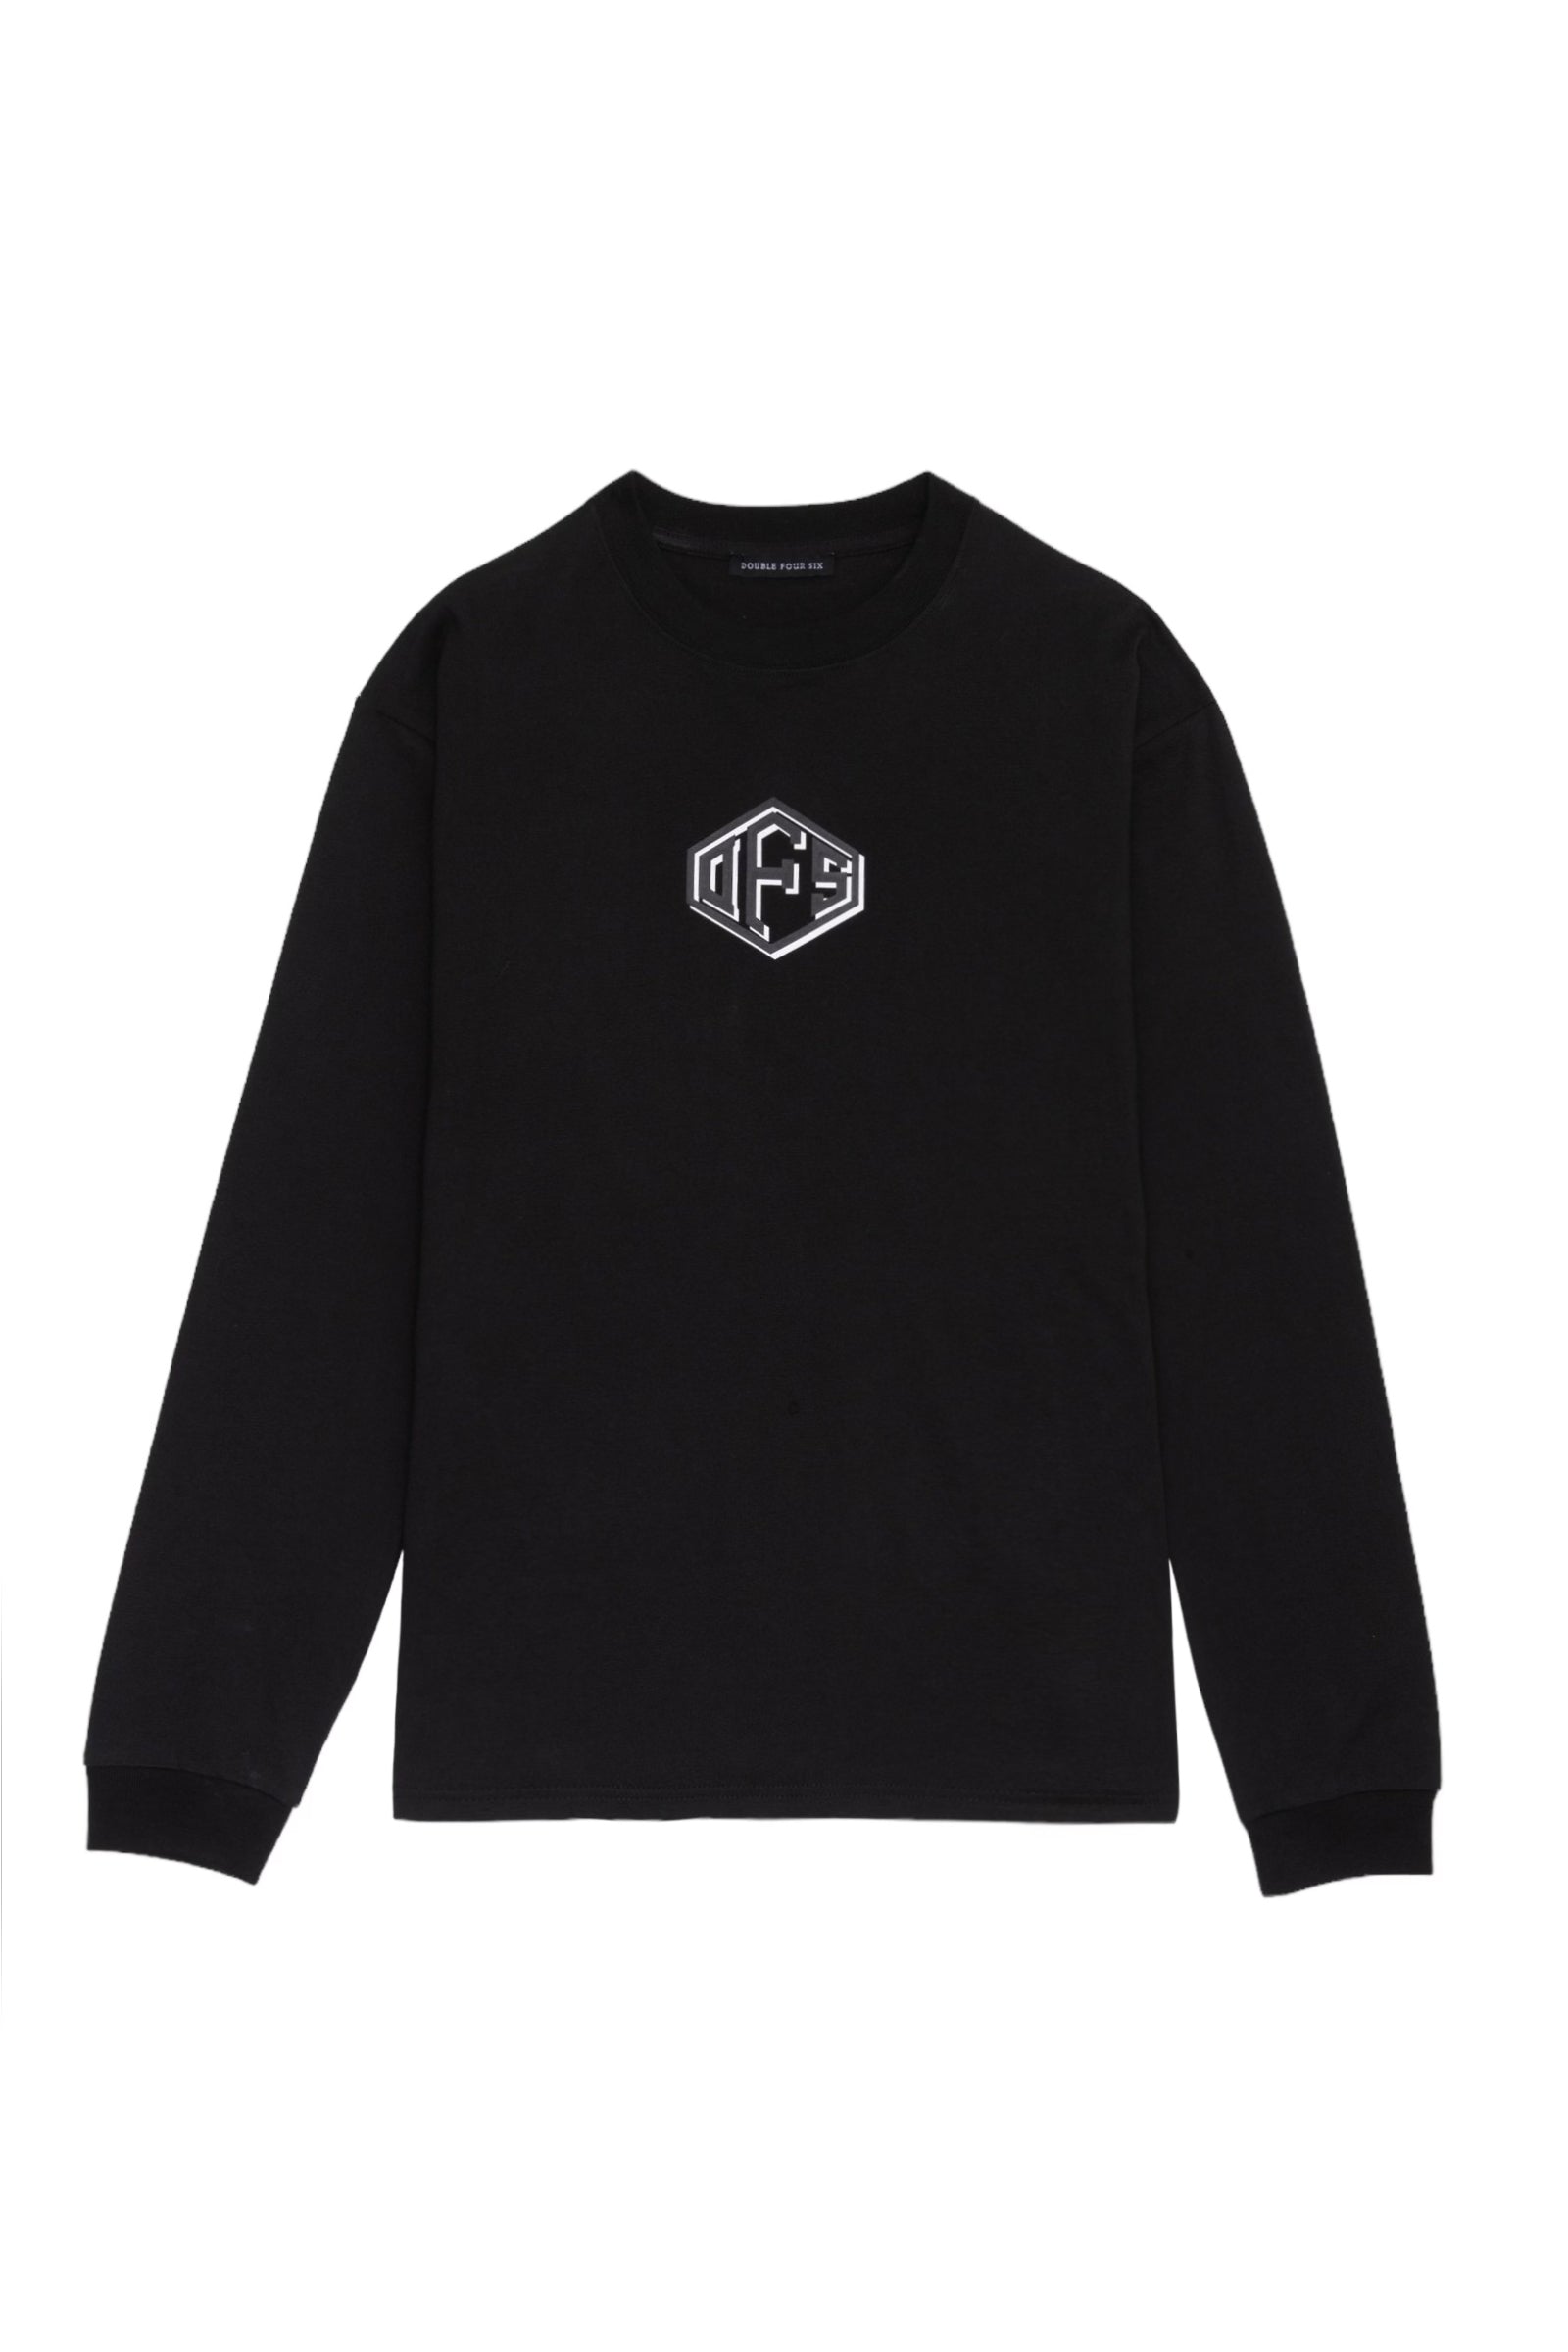 DFS-logo Long Sleeve T-shirt Black – 446 - DOUBLE FOUR SIX -